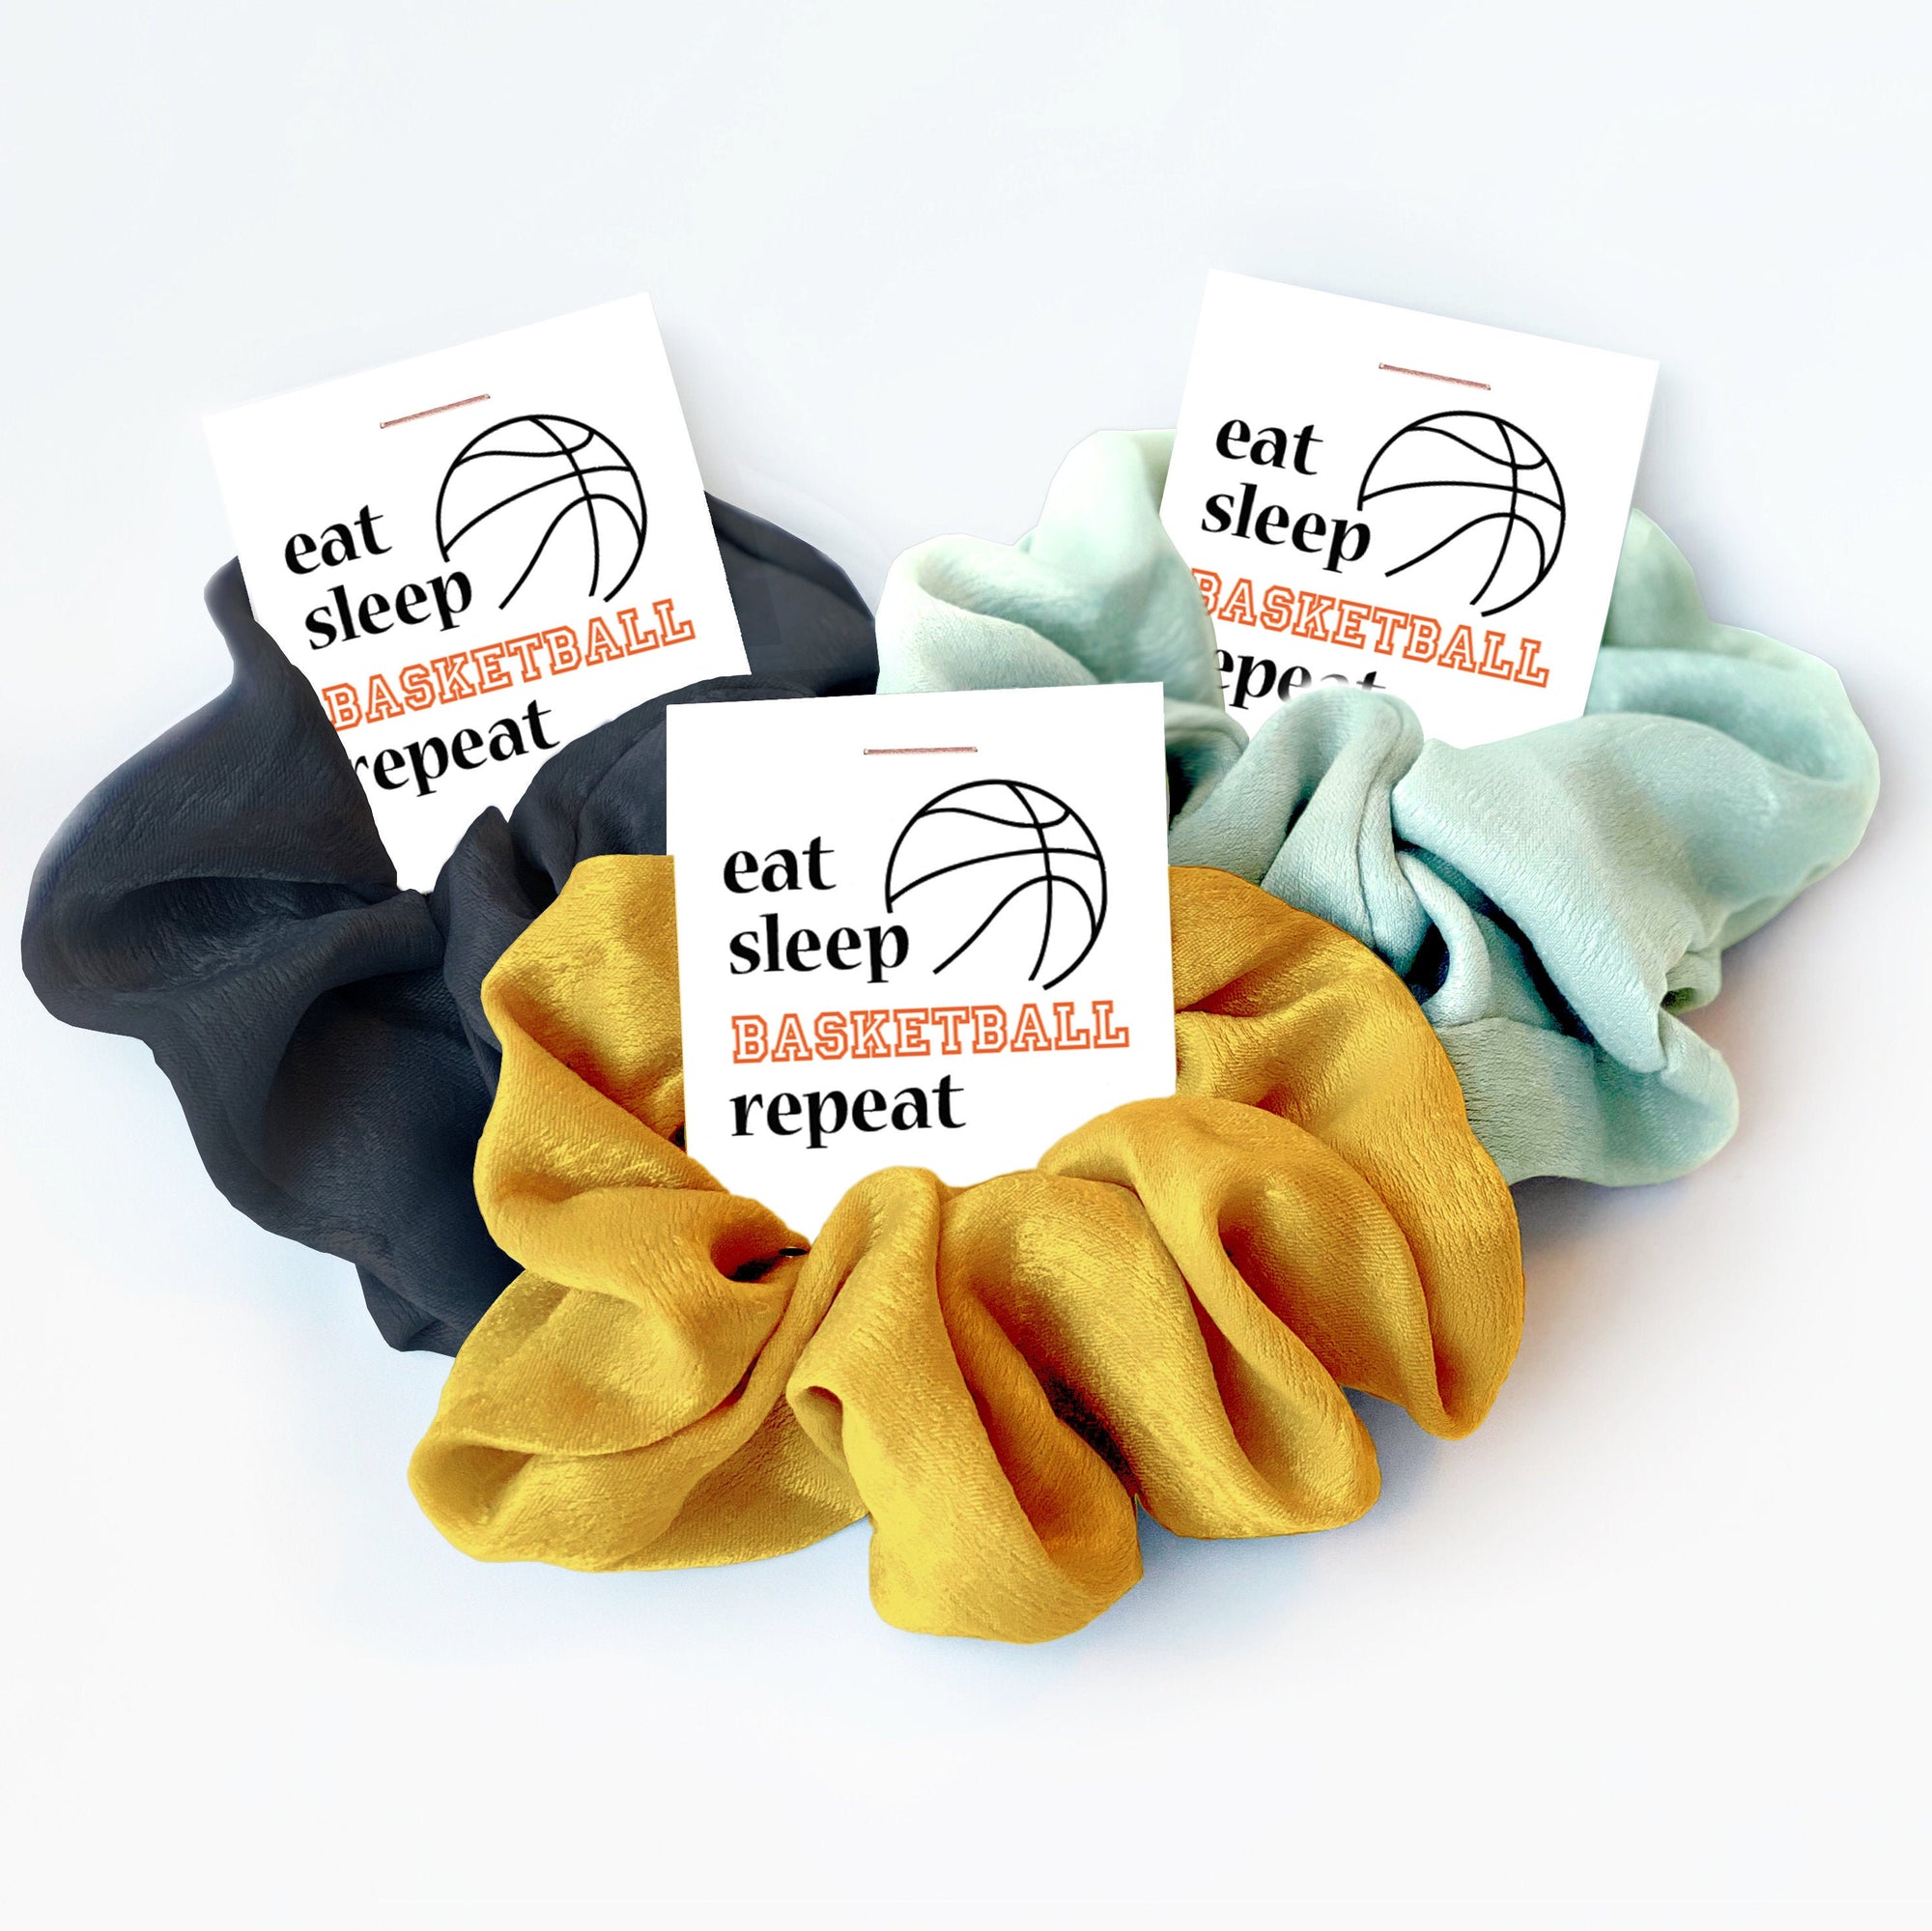 Los Angeles Lakers Basketball Team Handmade Scrunchie/ Hair 